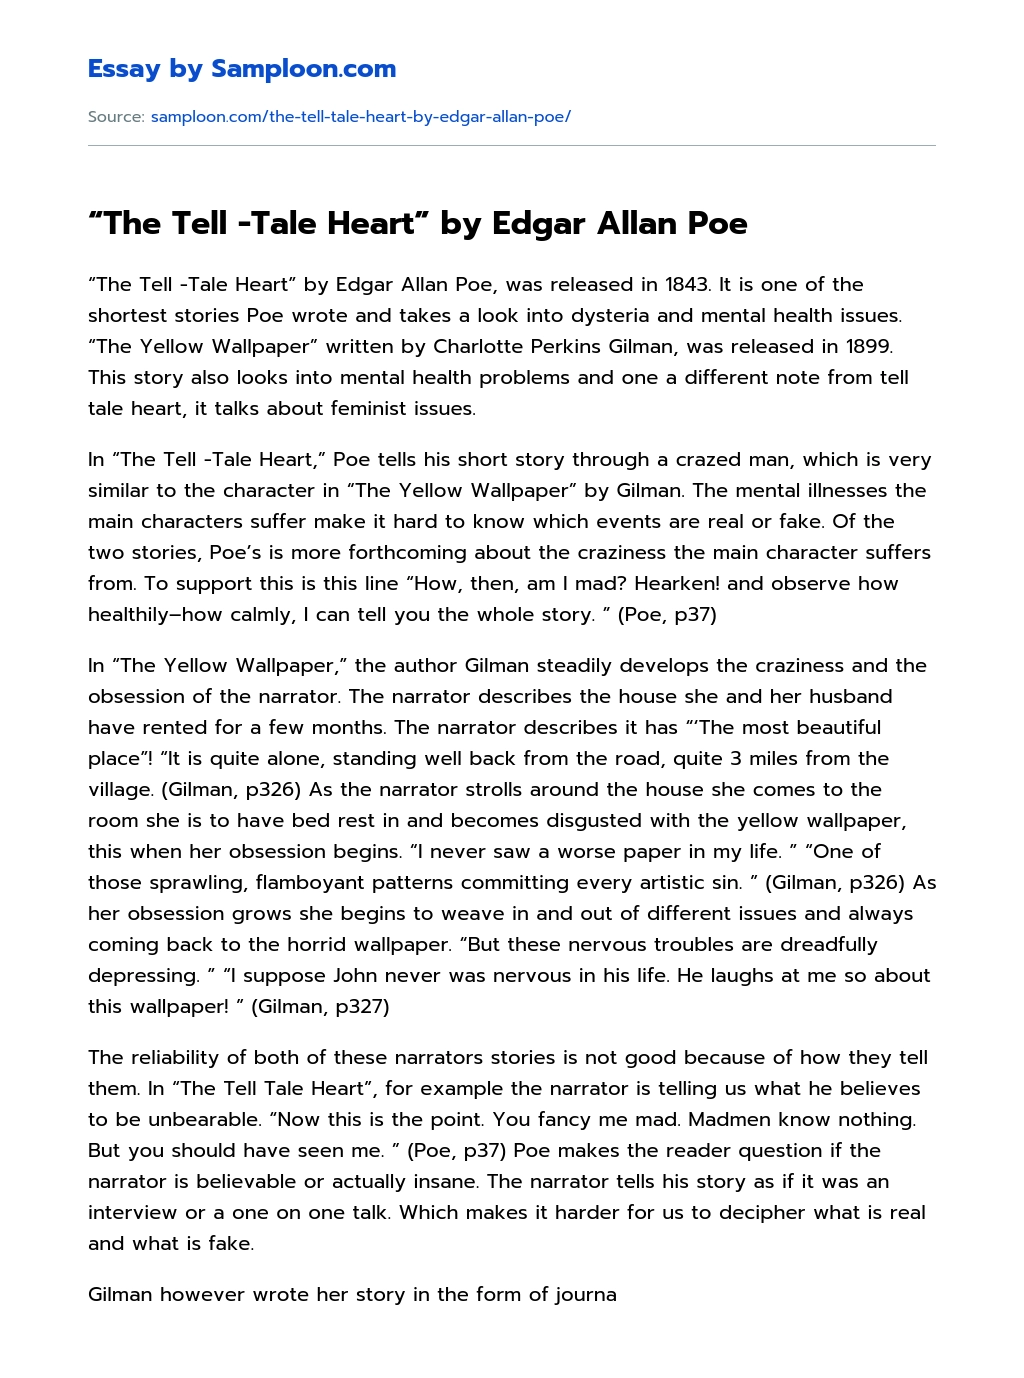 “The Tell -Tale Heart” by Edgar Allan Poe essay